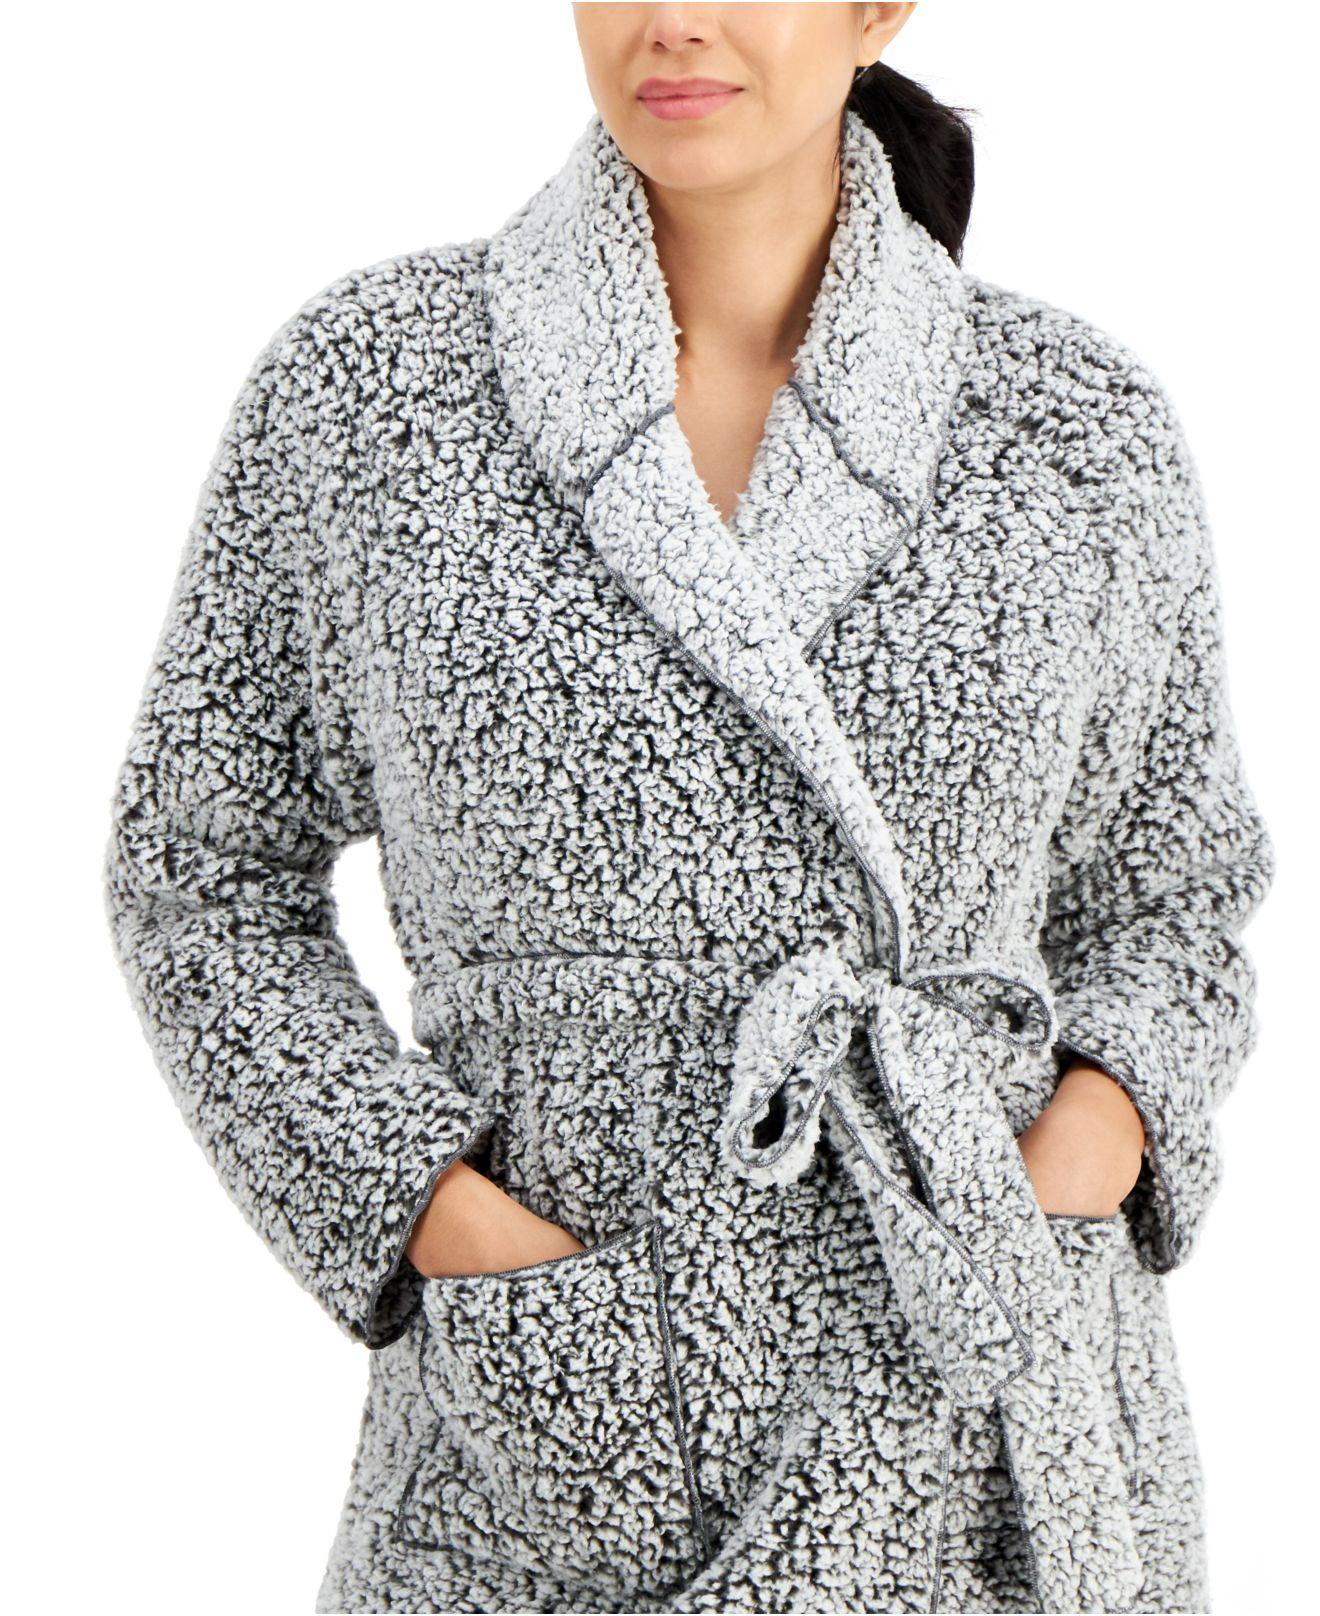 Greystone Solid Long Sleeve Fleece Sleep Top